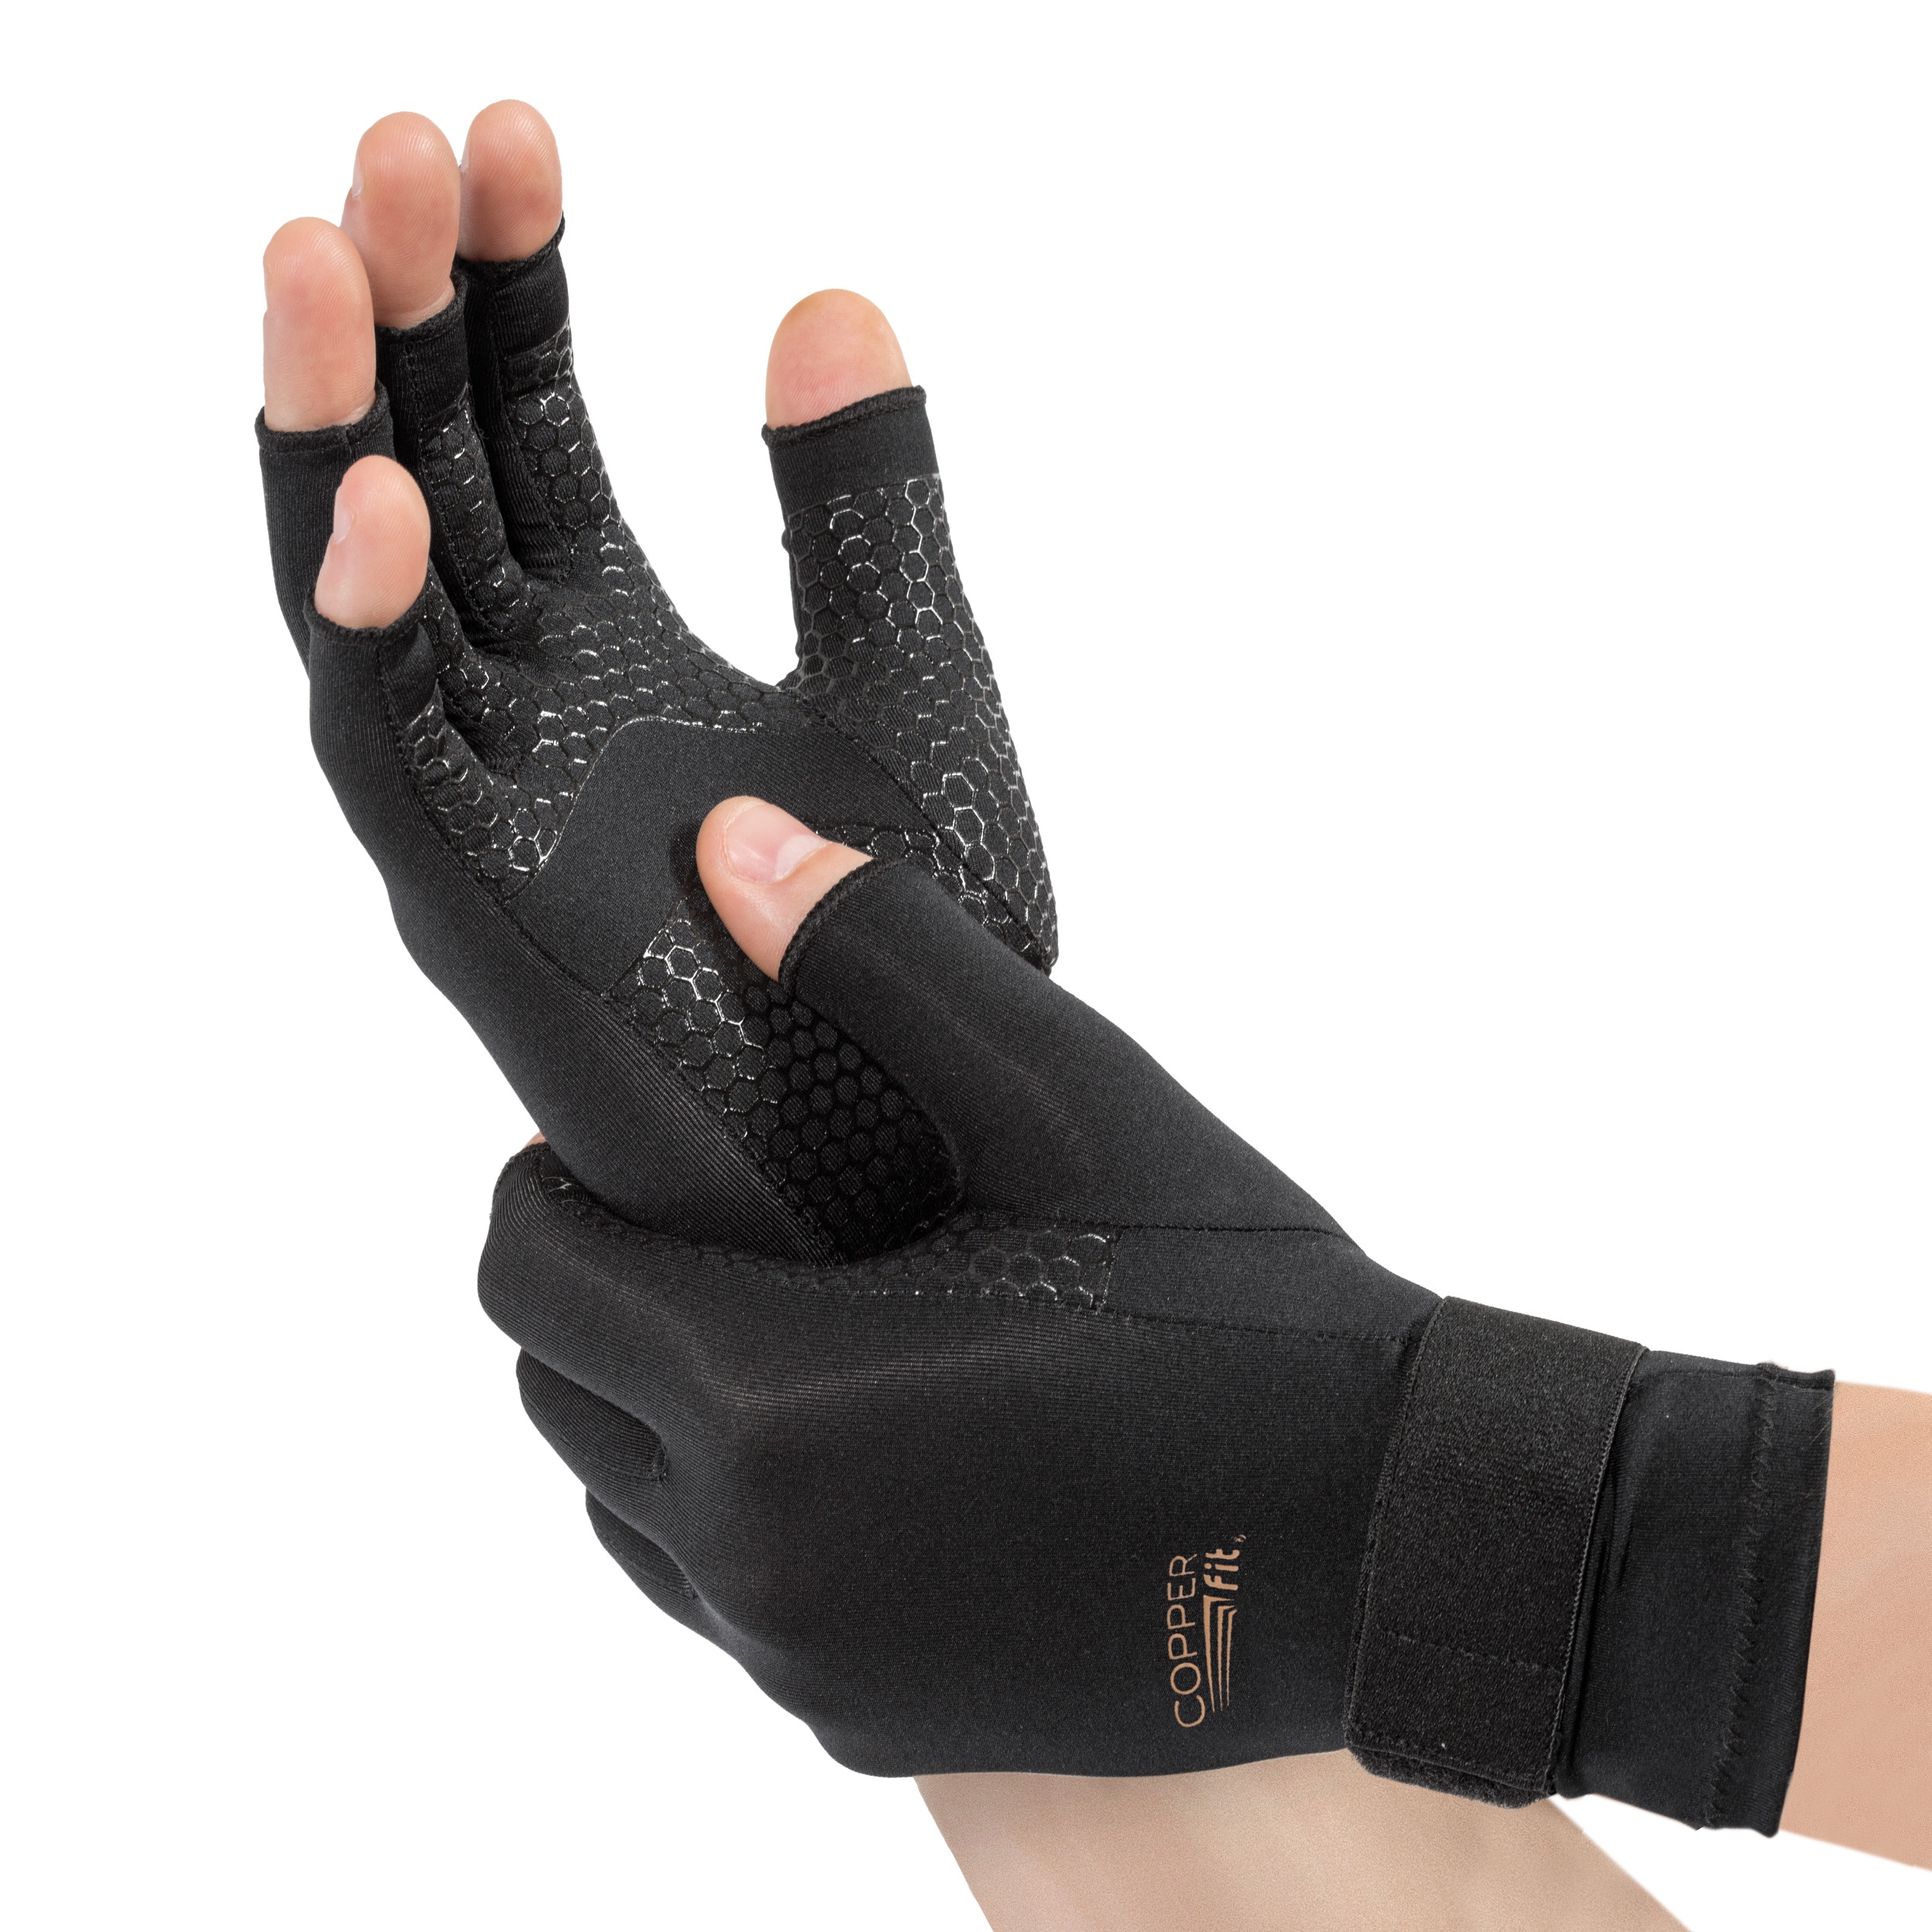 Copper Fit Copper Infused Wrist Support Gloves, Black, Open Finger